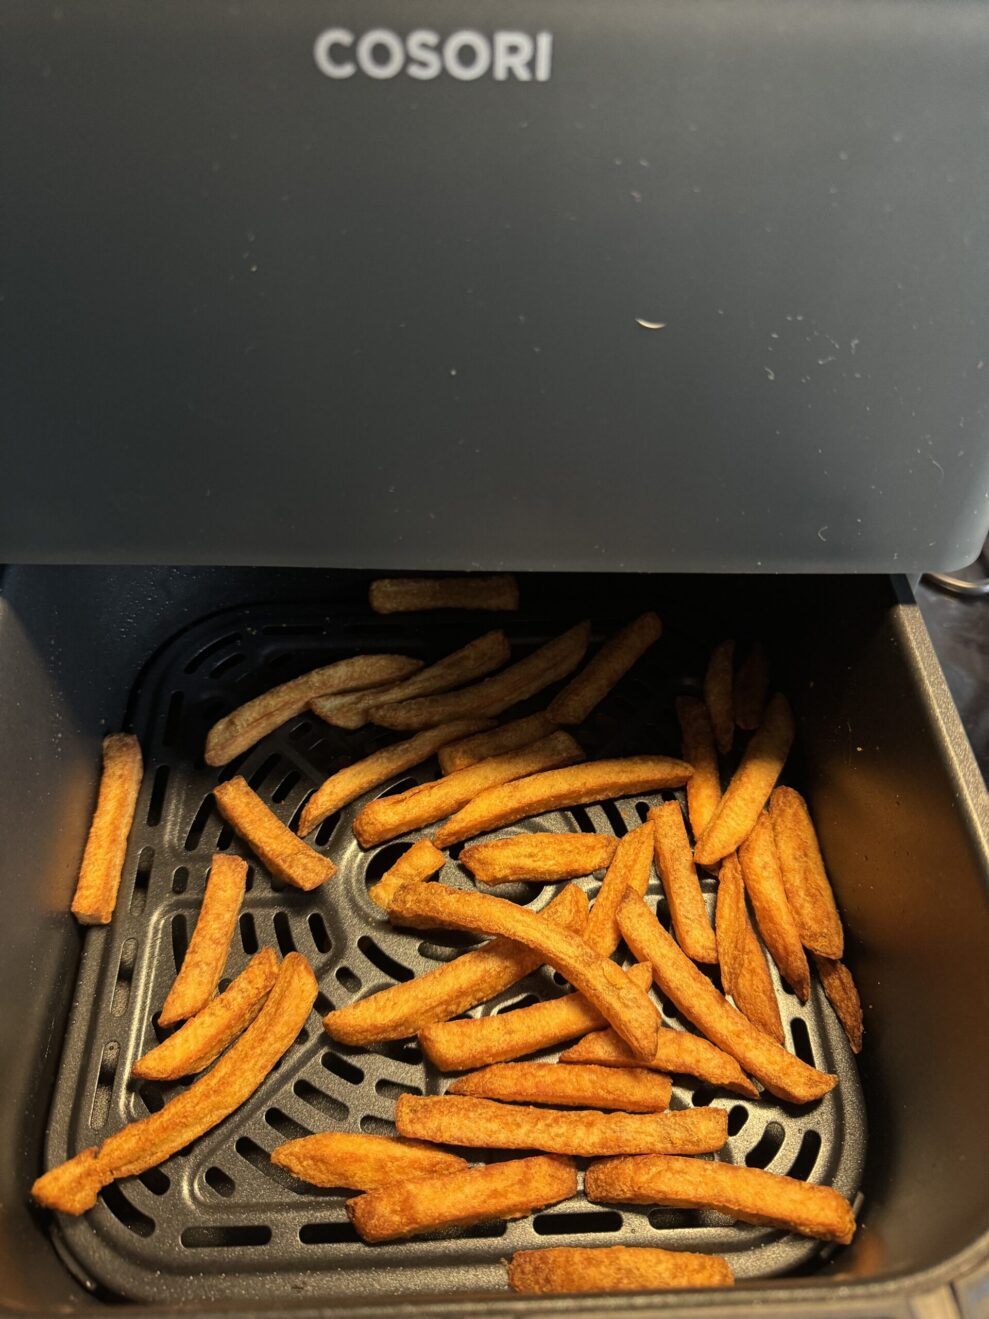 Cosori Dual Blaze fries